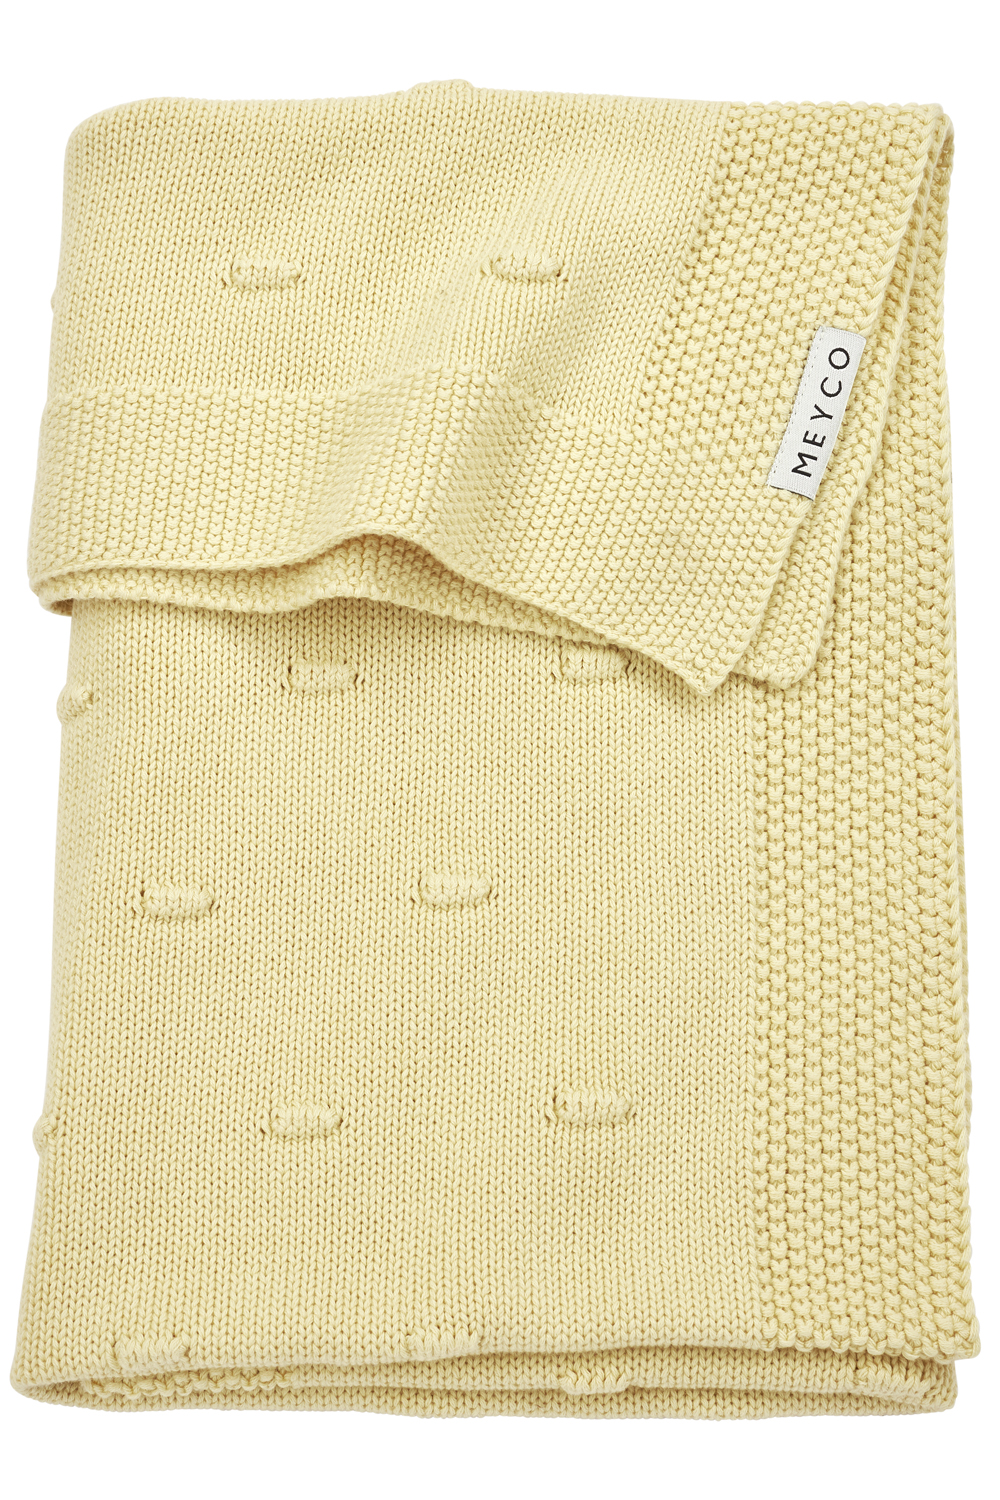 Babydecke klein Knots - Soft Yellow - 75x100cm